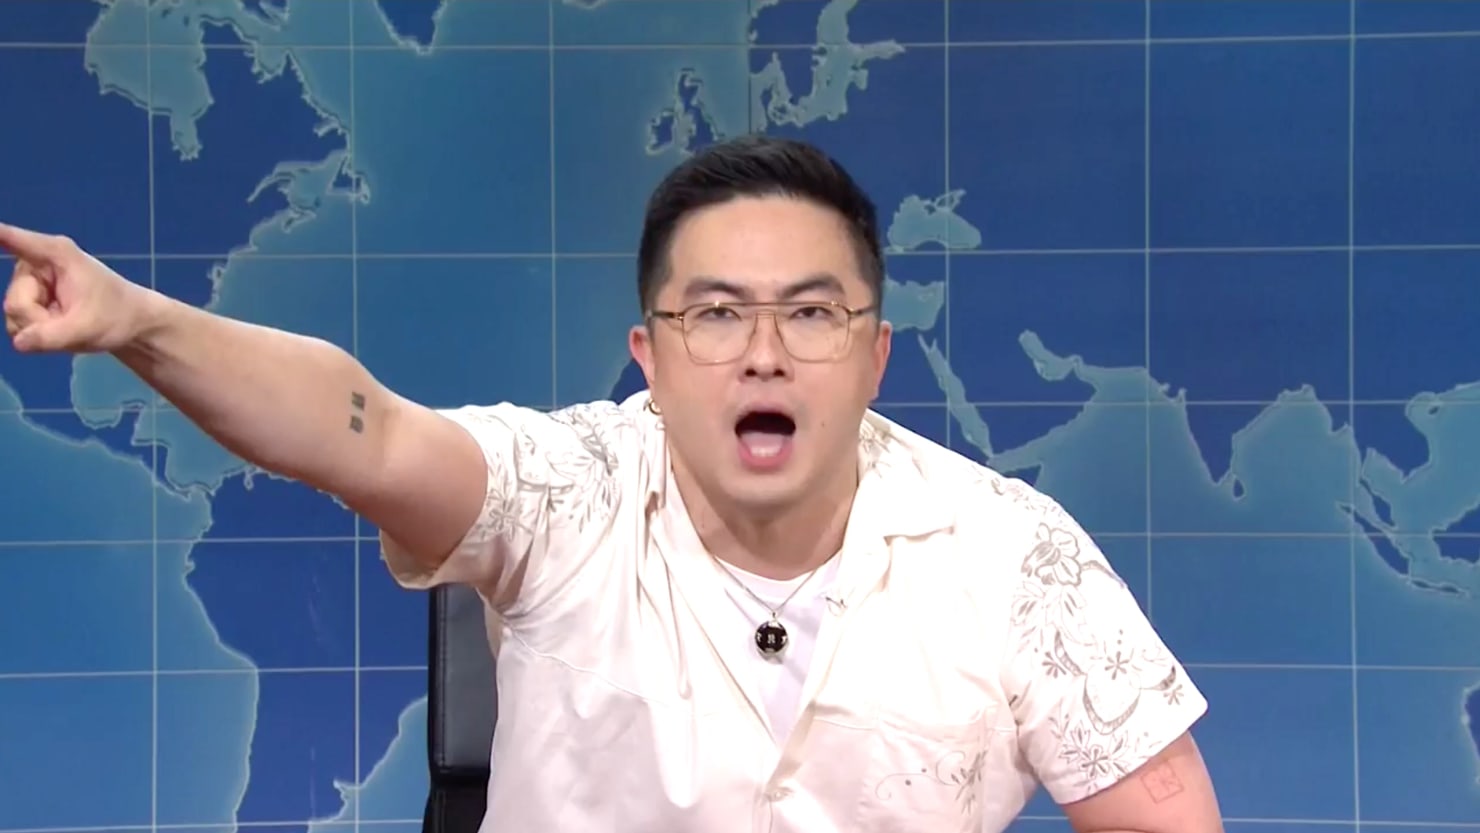 SNL’s ‘Asian Cast Member’ Bowen Yang sounds anti-Asian racism